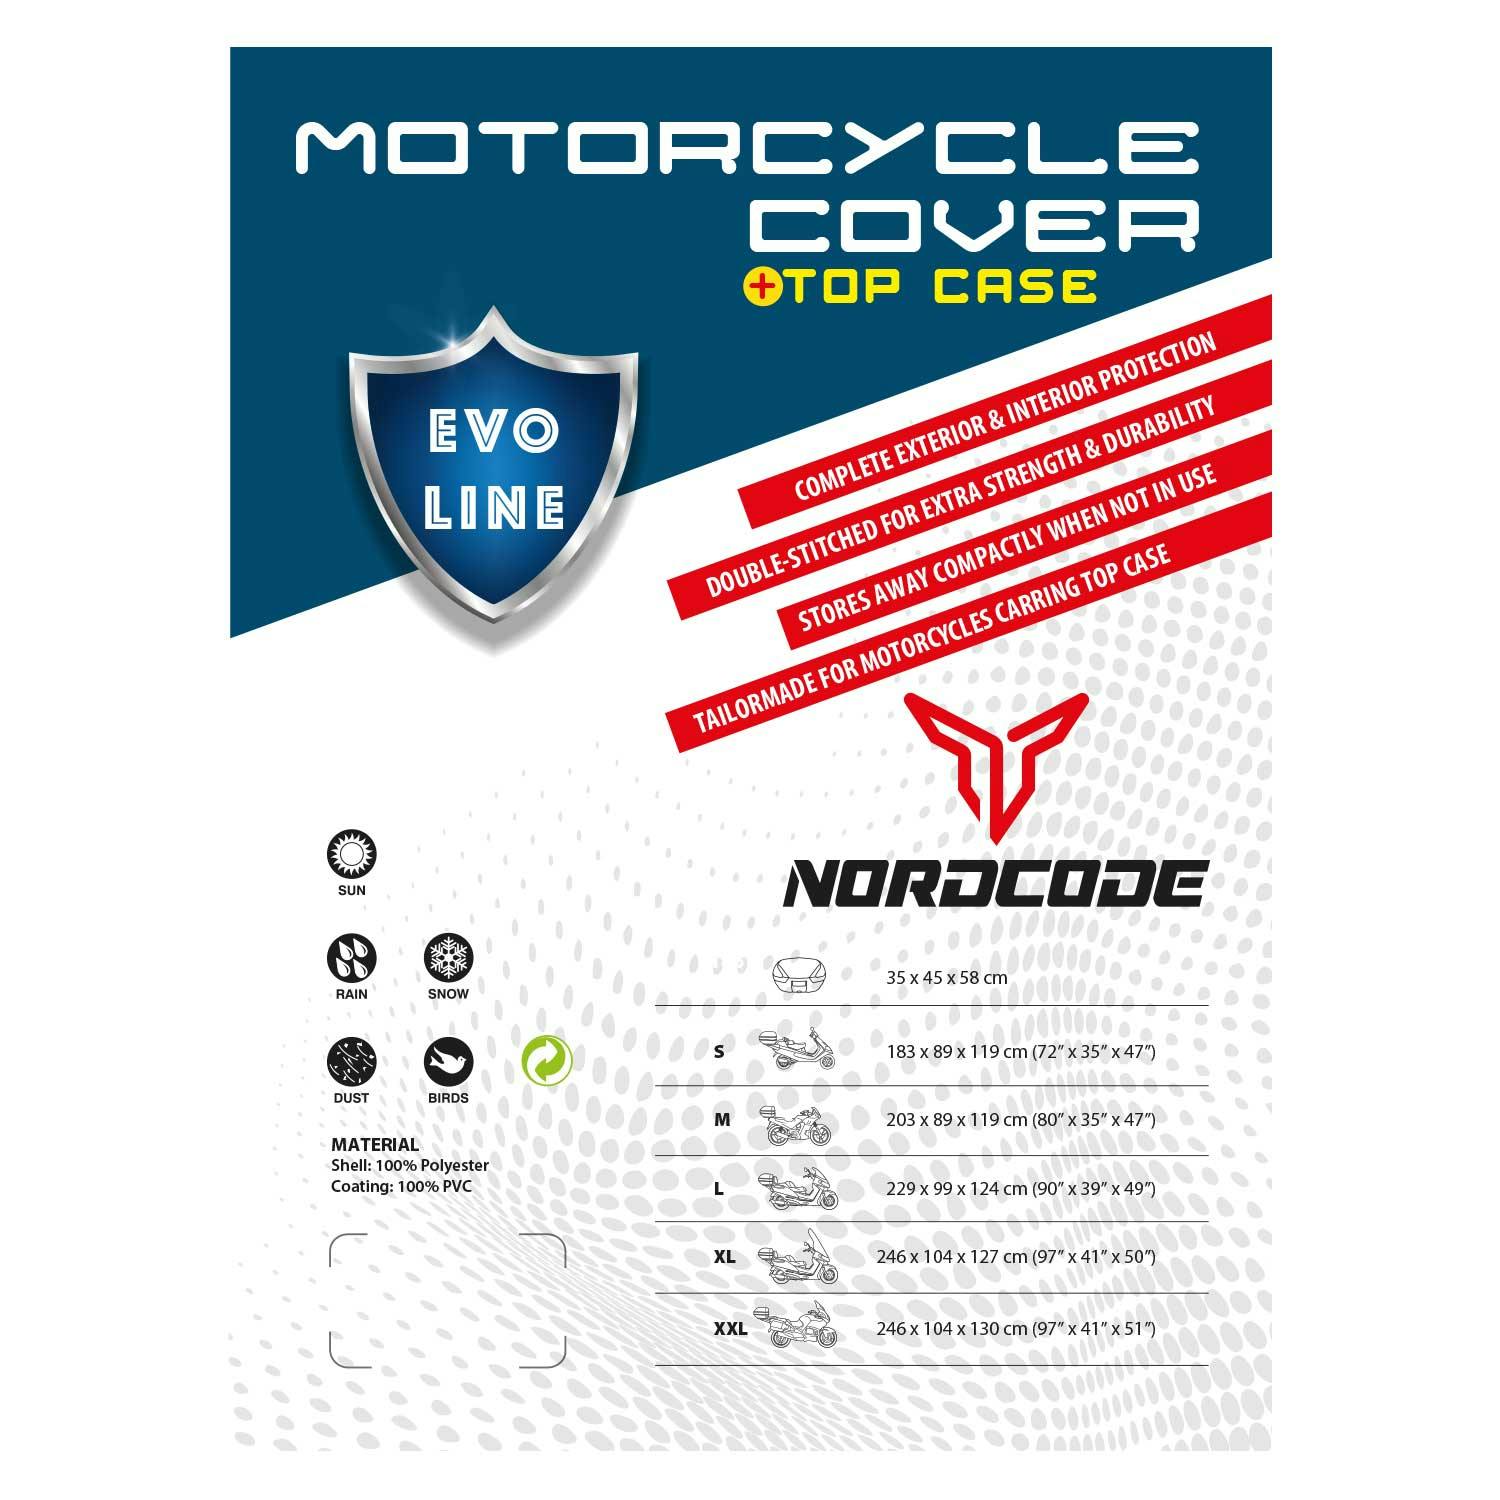 Kάλυμμα μοτό Nordcode αδιαβροχο Evo Line L +Topcase 229*99*124